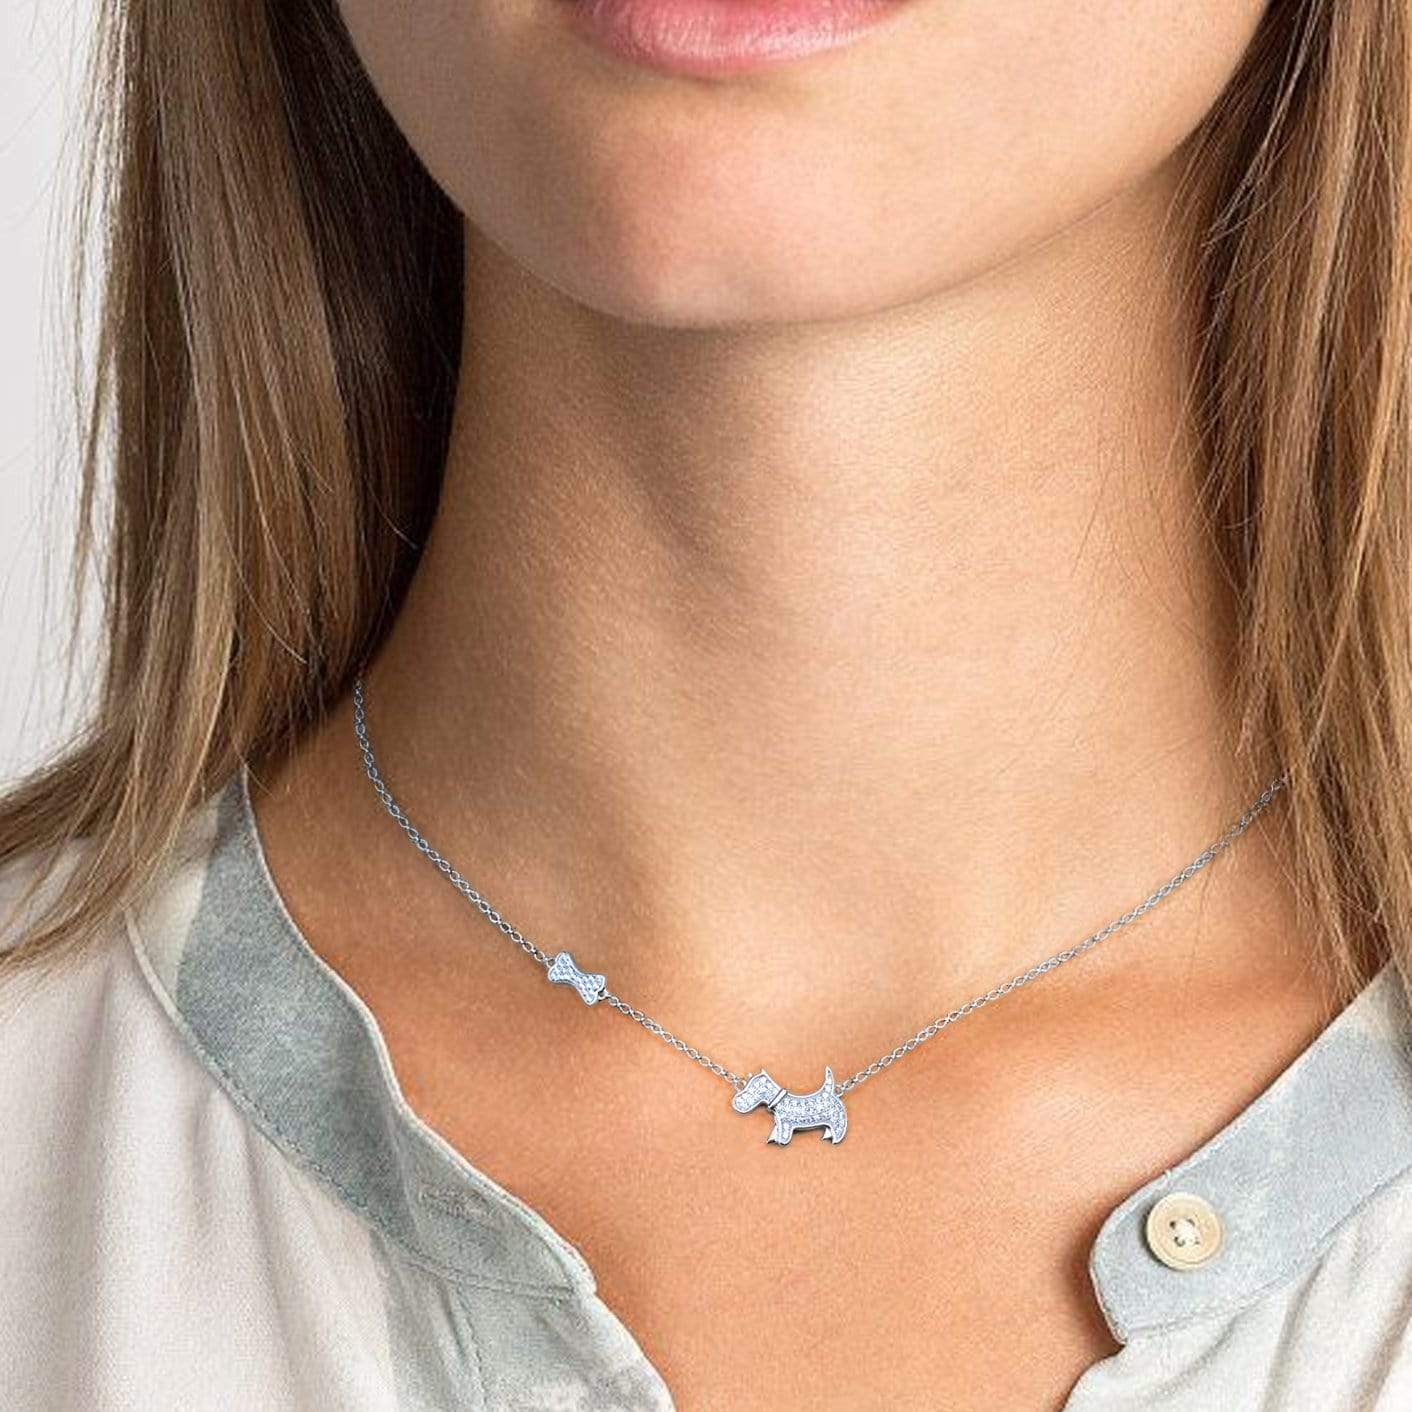 Lynora Jewellery Necklace 18" adj / Sterling Silver / Clear Dog Necklace Sterling Silver